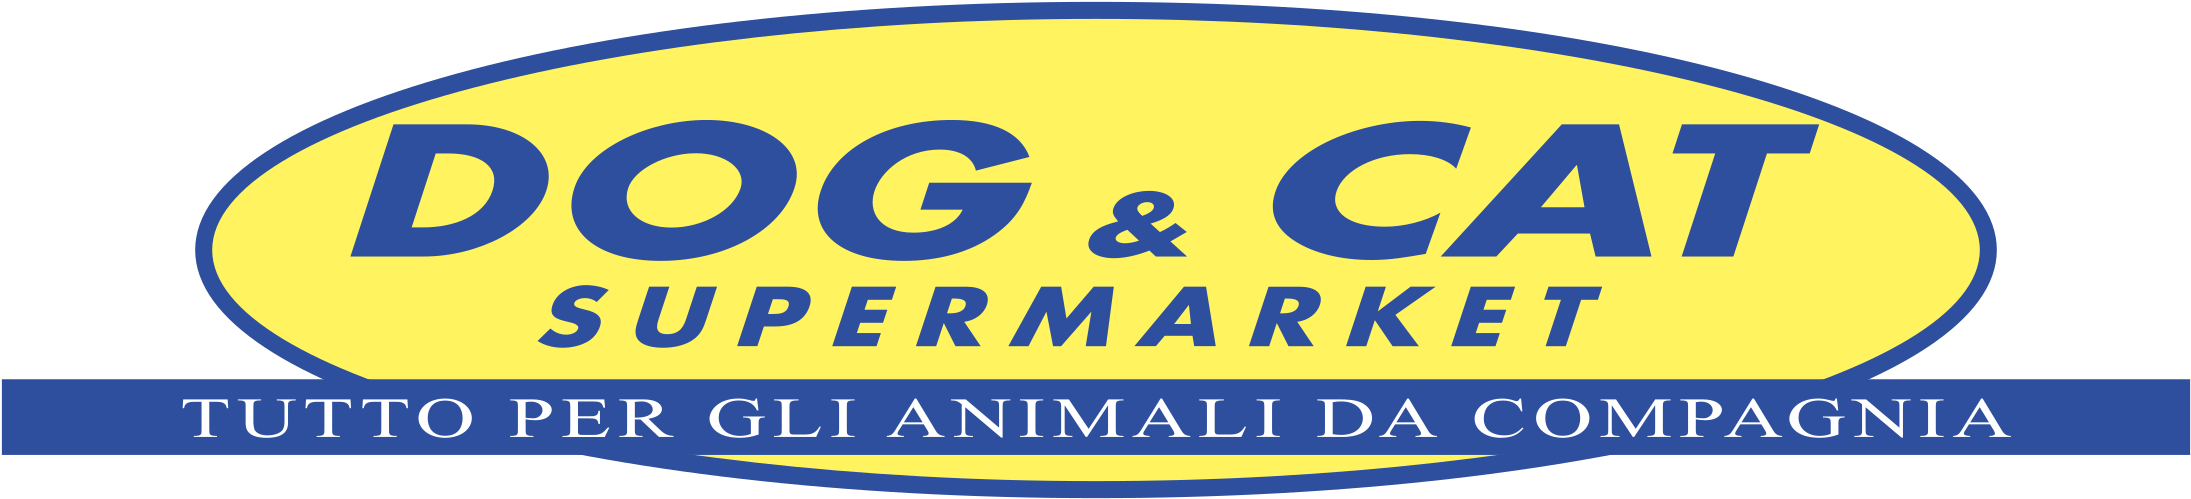 Dog & Cat Supermarket Logo Png Transparent Clipart (2400x2400), Png Download